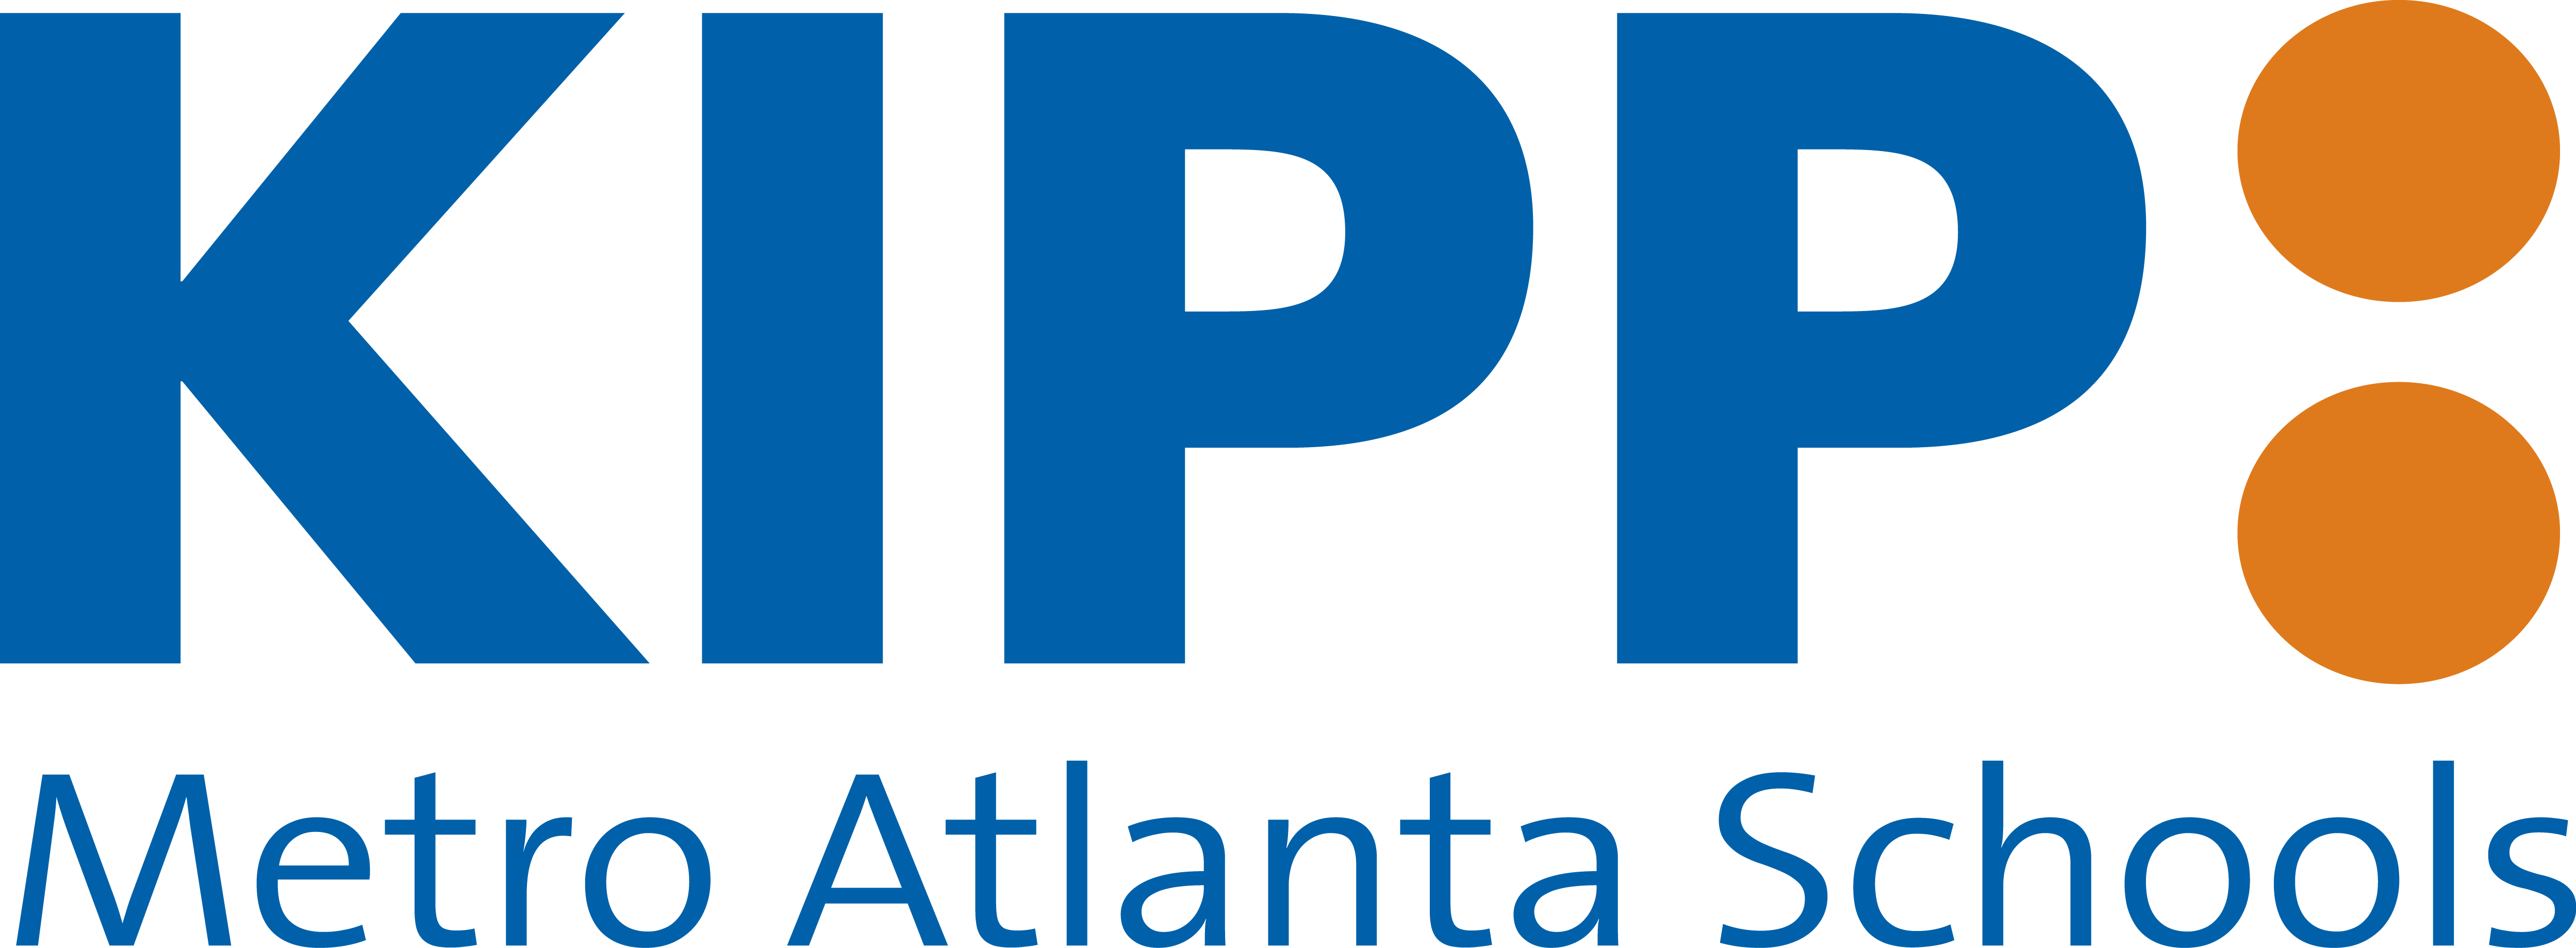 Kipp Logo - Kendeda Fund - Funding Education in Atlanta | KIPP Metro Atlanta Schools